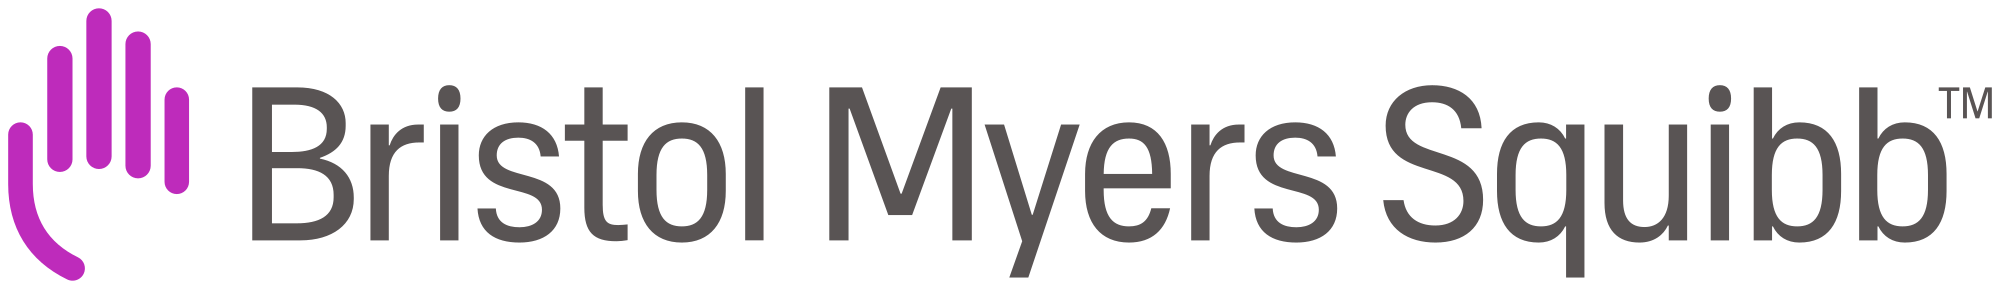 Bristol-Myers_Squibb_logo.svg